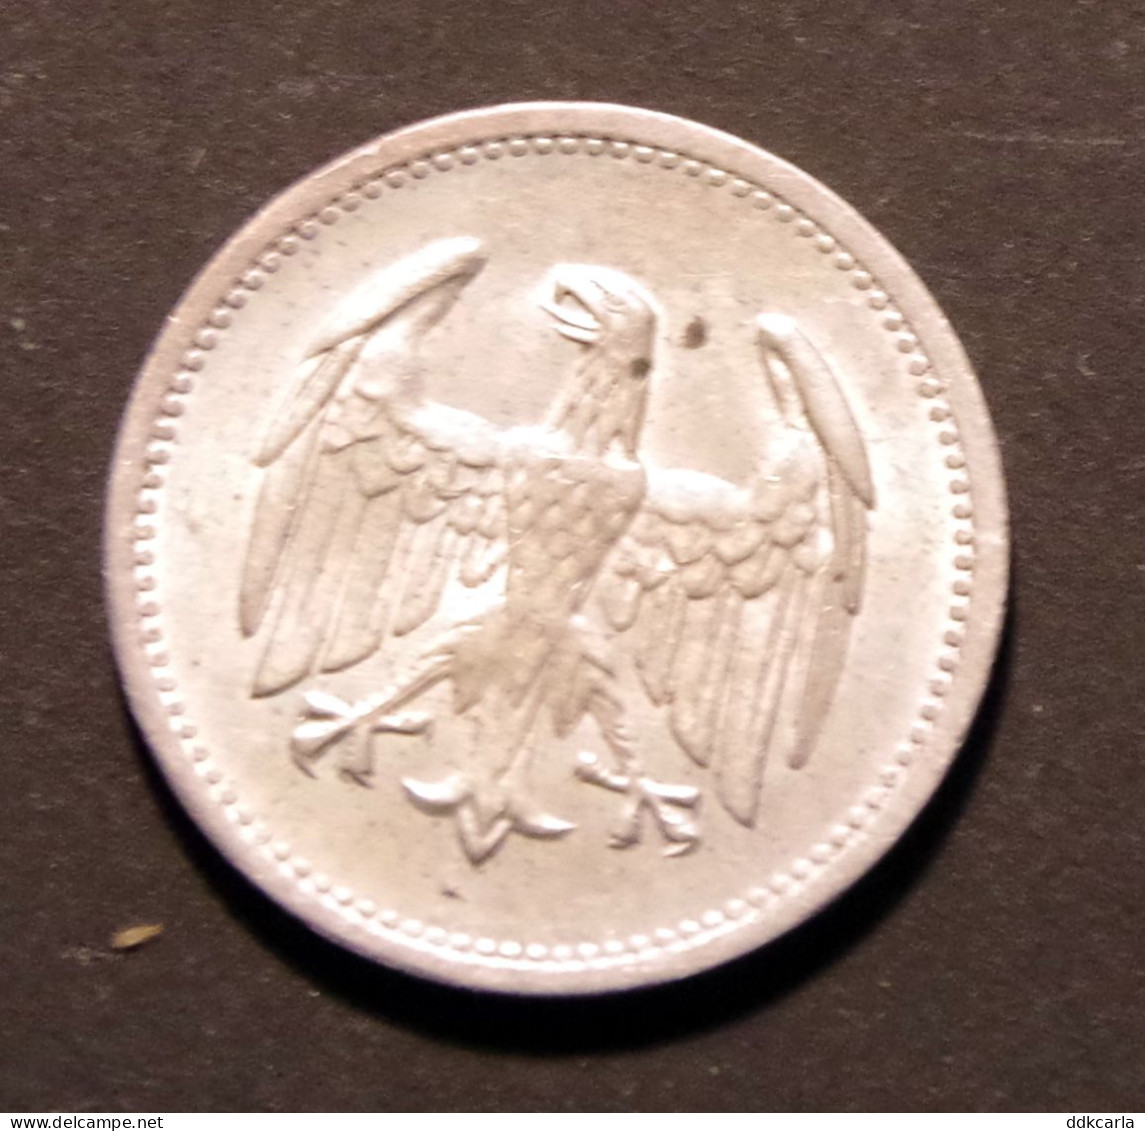 1 Mark 1924 A  Weimarrepubliek (silber) - 1 Mark & 1 Reichsmark